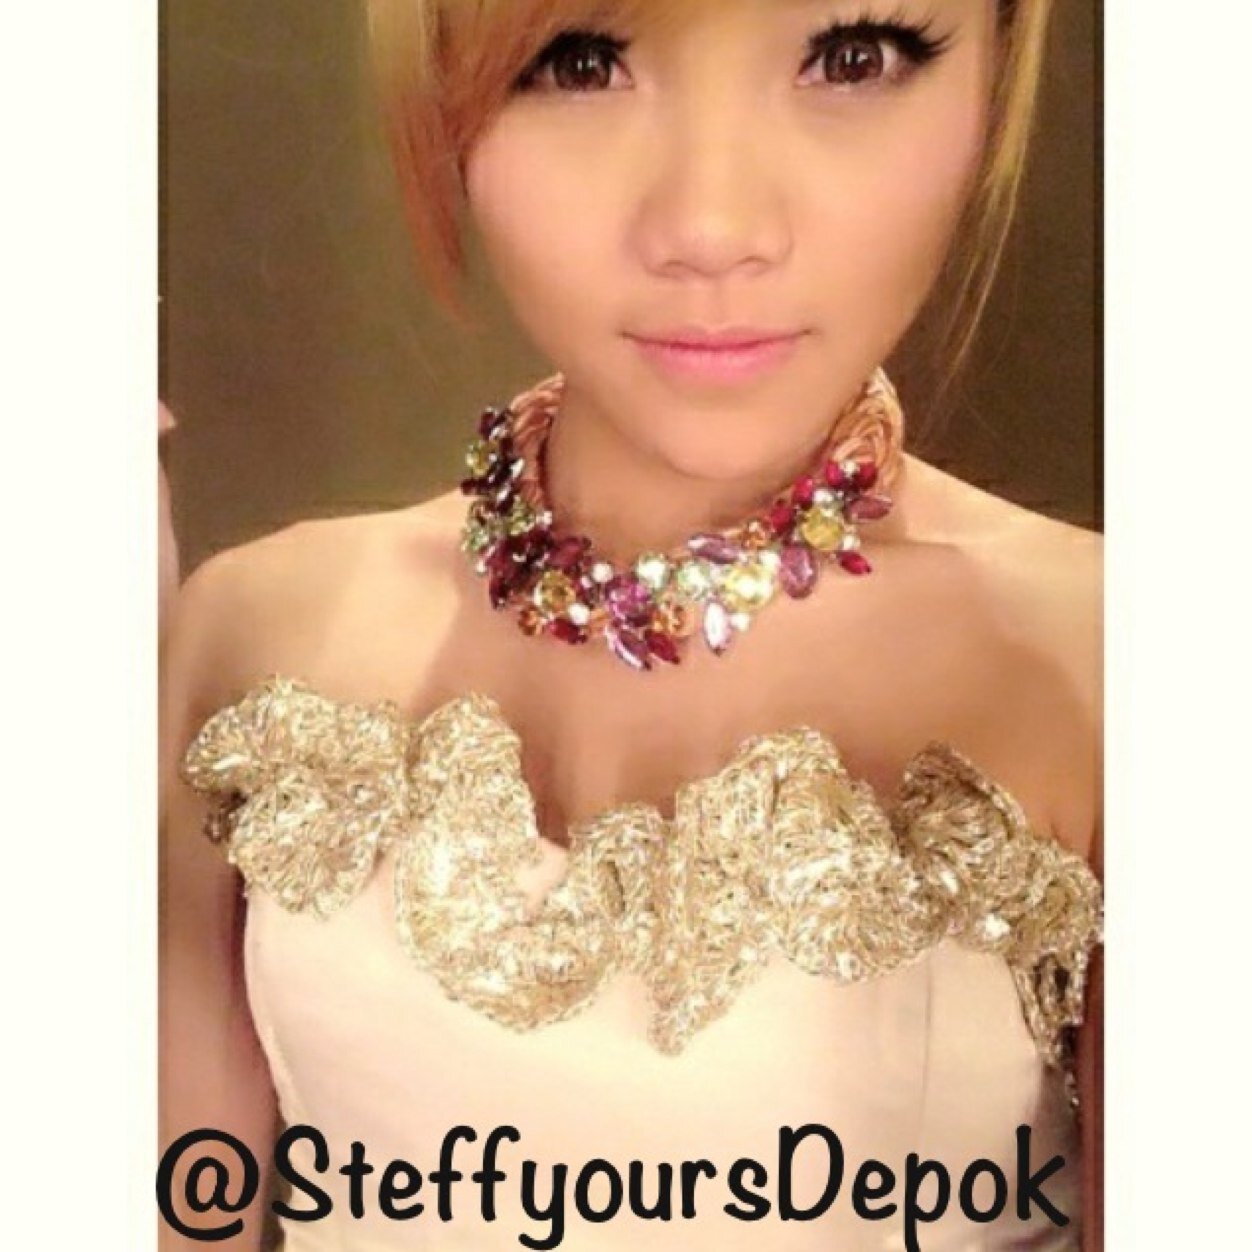 Official Steffyours Depok |Hanya Sebuah Fanbase Yang Tulus Dan Selalu Support @SteffyChiBi | Part Of @Twibi_Depok |Followed by: @SteffyChiBi